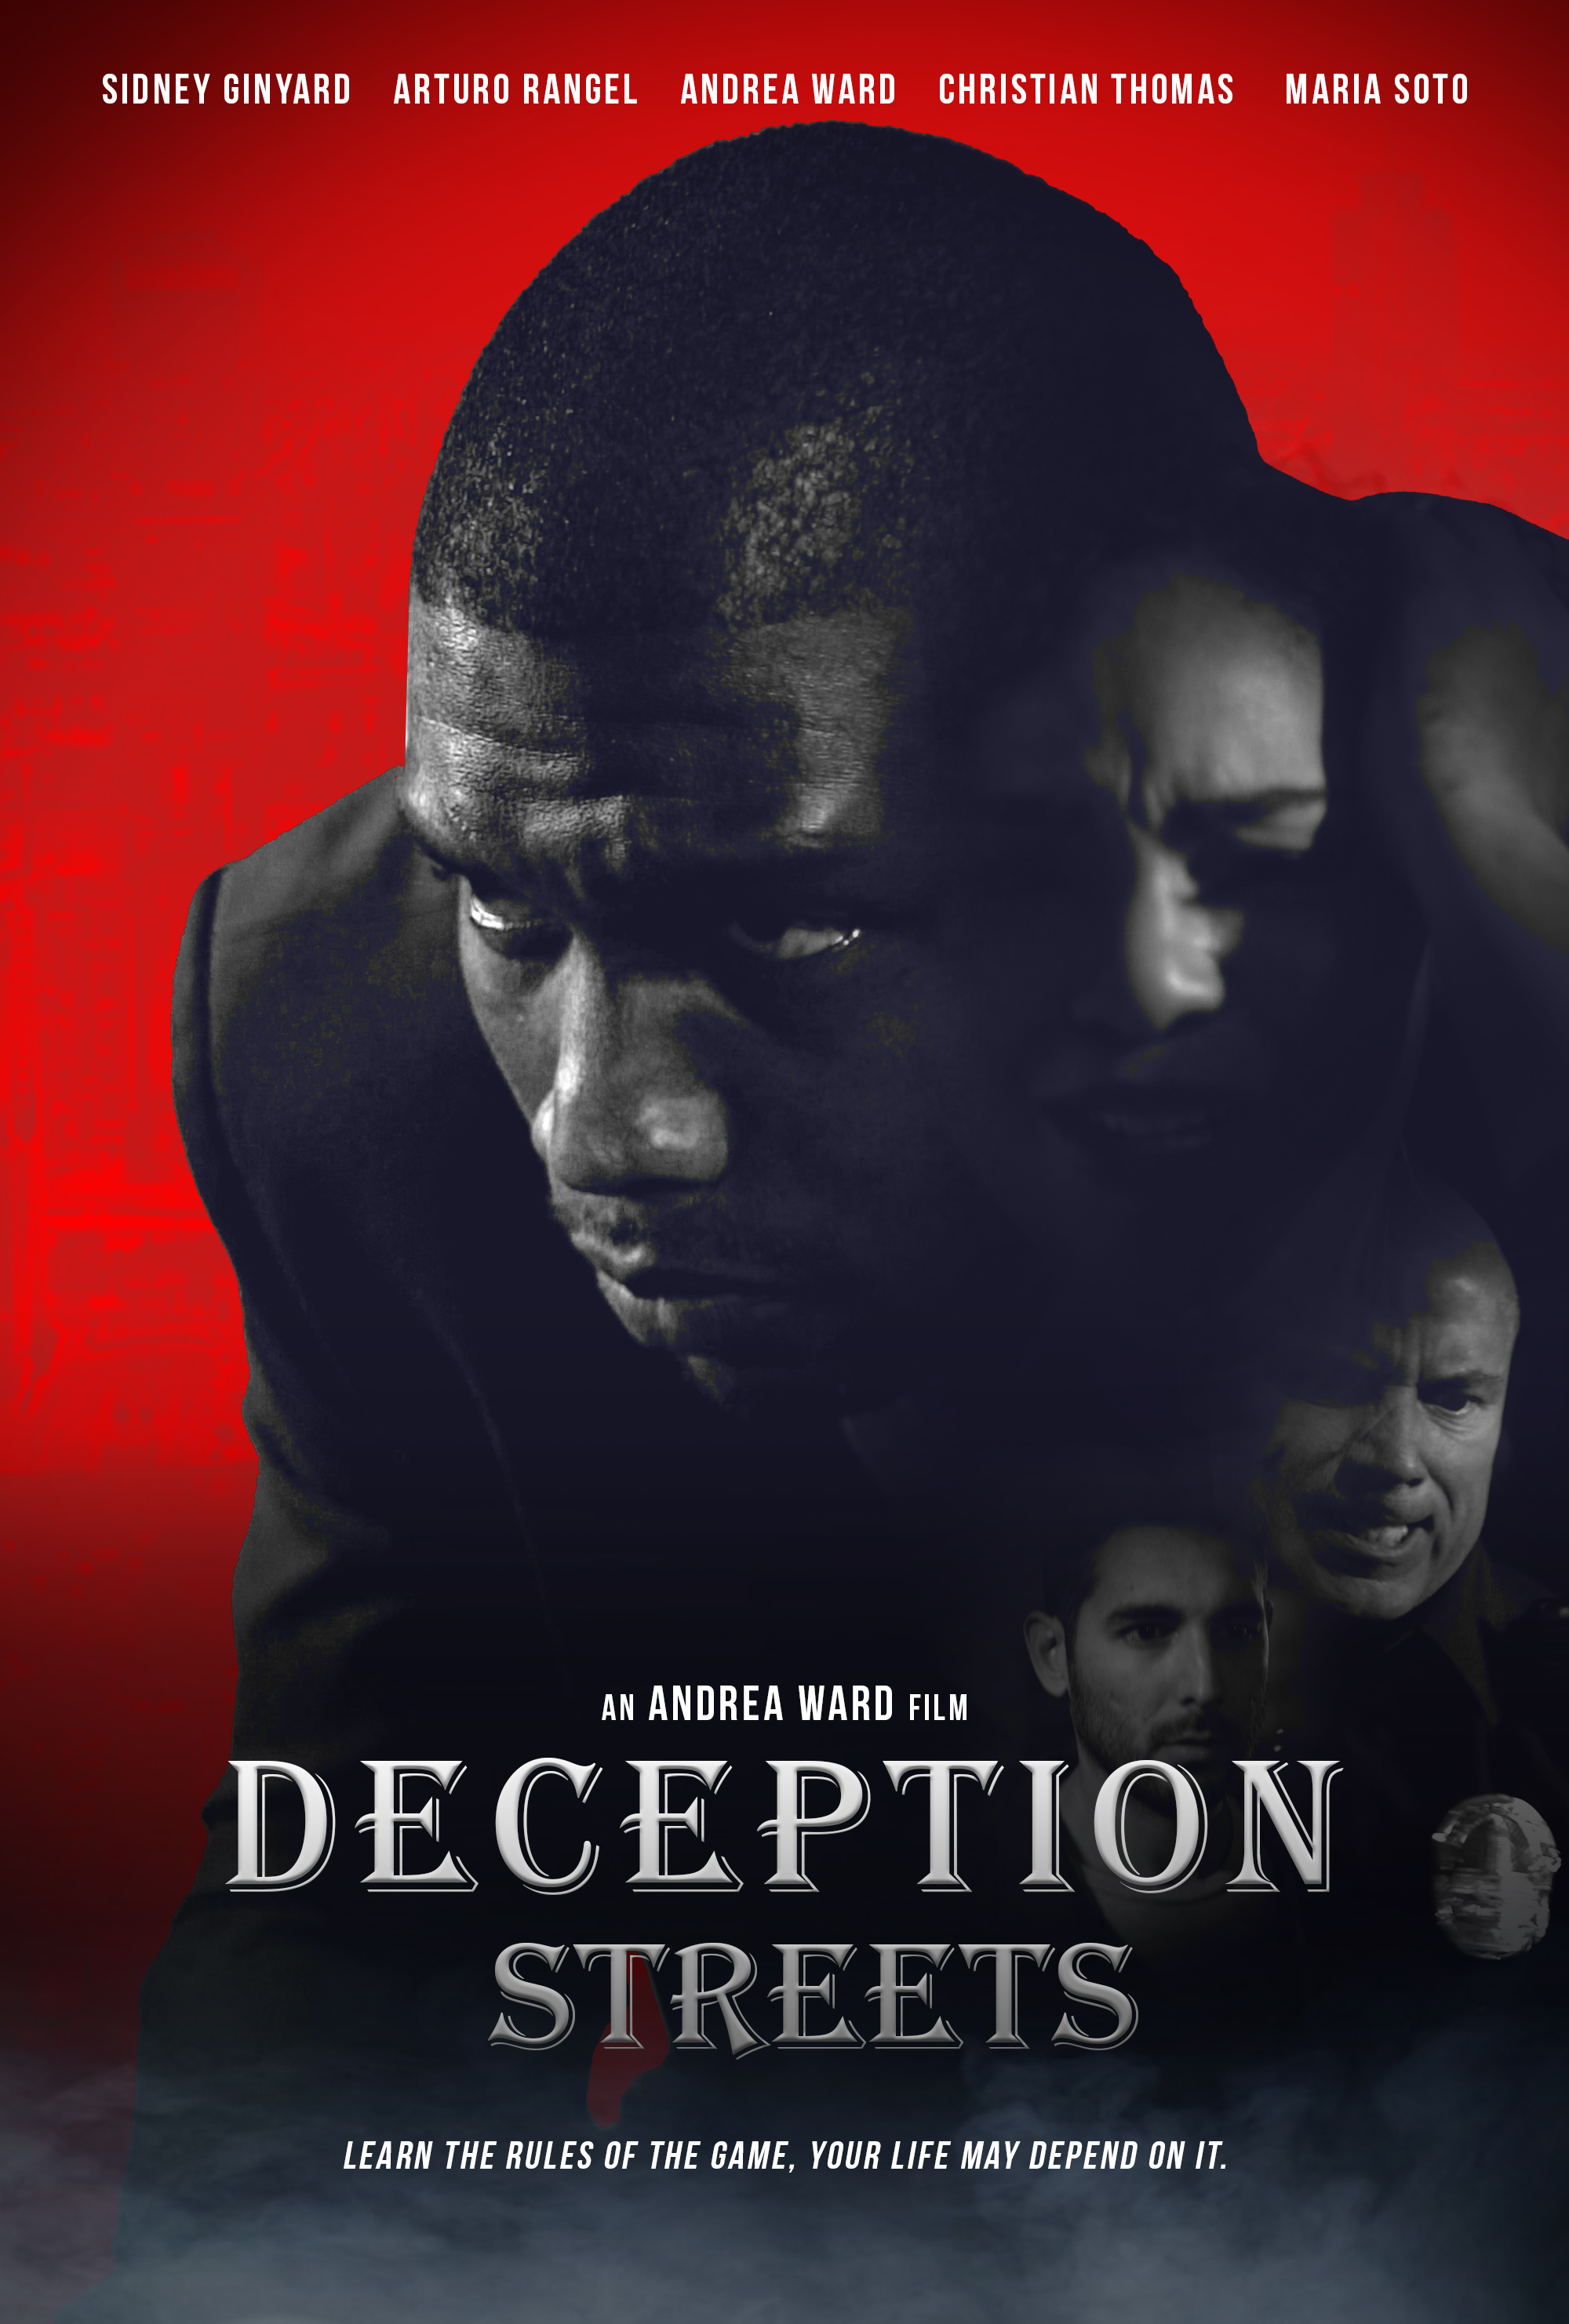 Deception Streets (2021)